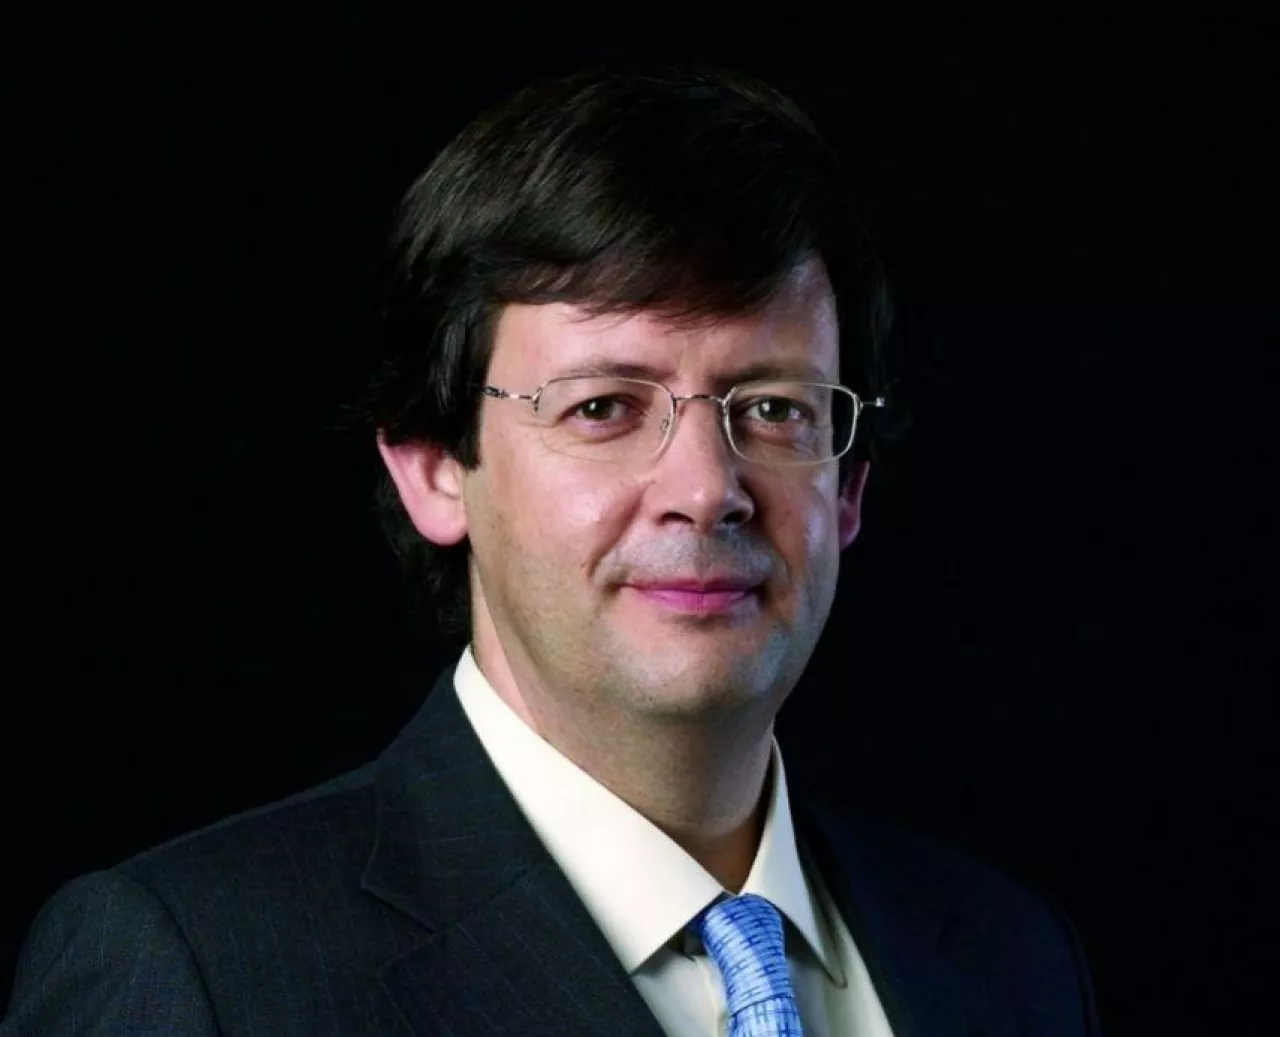 Pedro Soares dos Santos, prezes Jeronimo Martins (materiały prasowe)